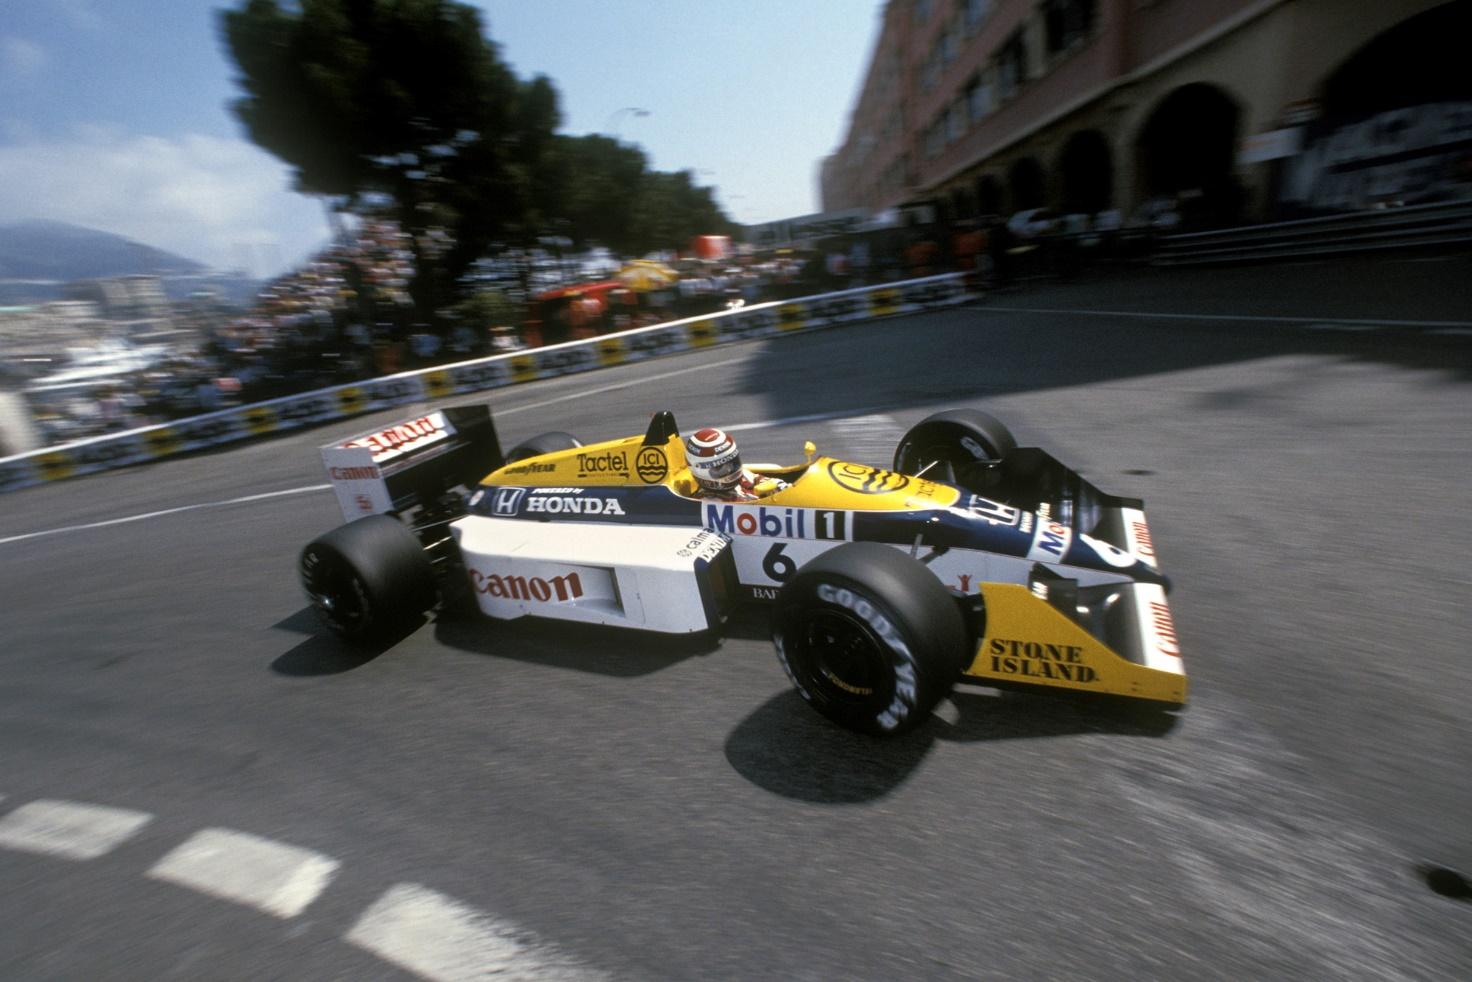 Nelson Piquet at the 1987 Monaco Grand Prix.